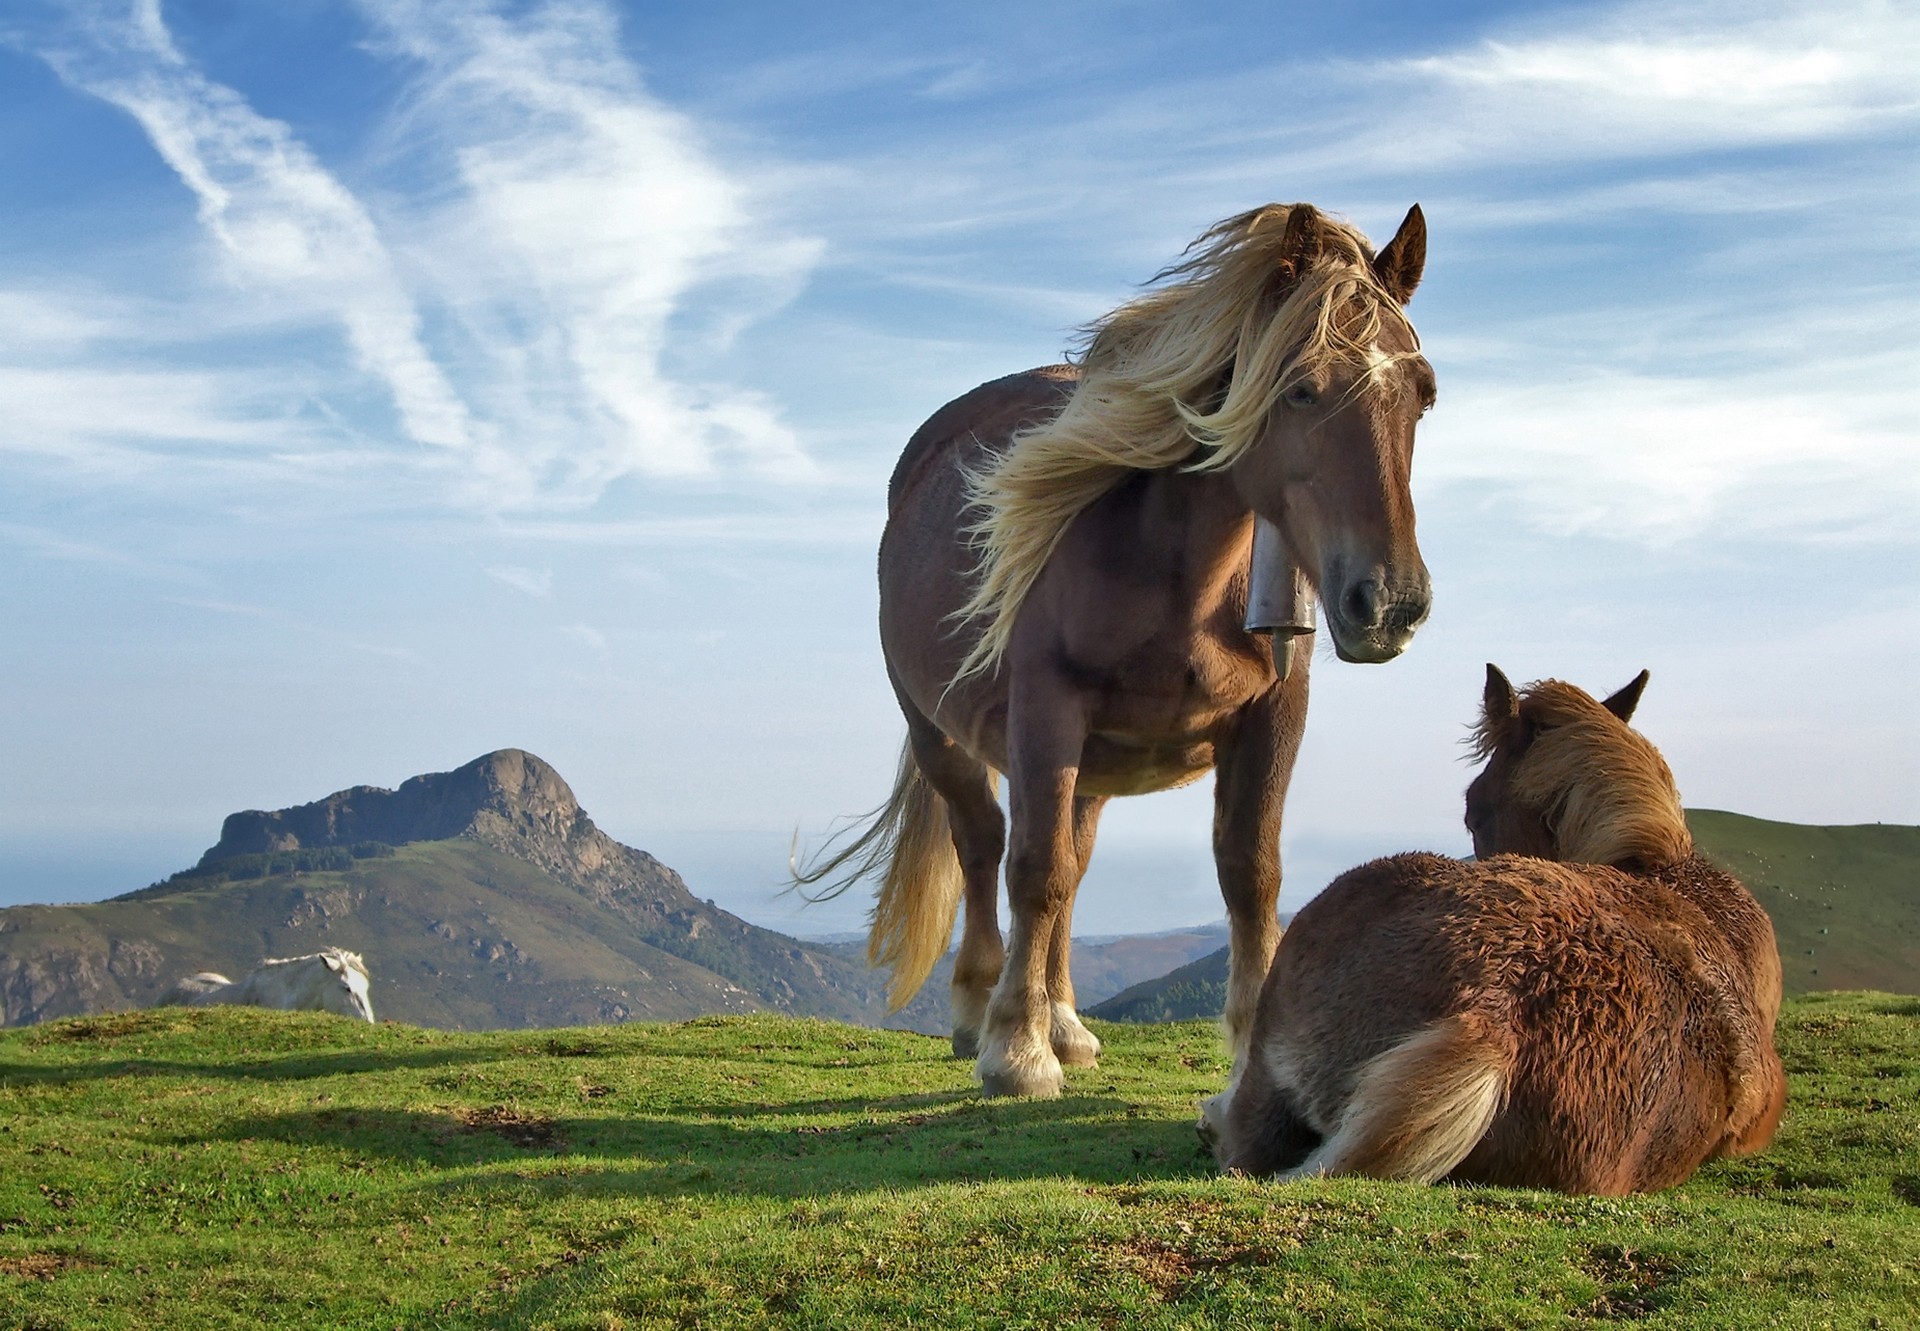 General 1920x1331 horse animals wildlife mountains grass nature landscape Mongolian horse mammals outdoors